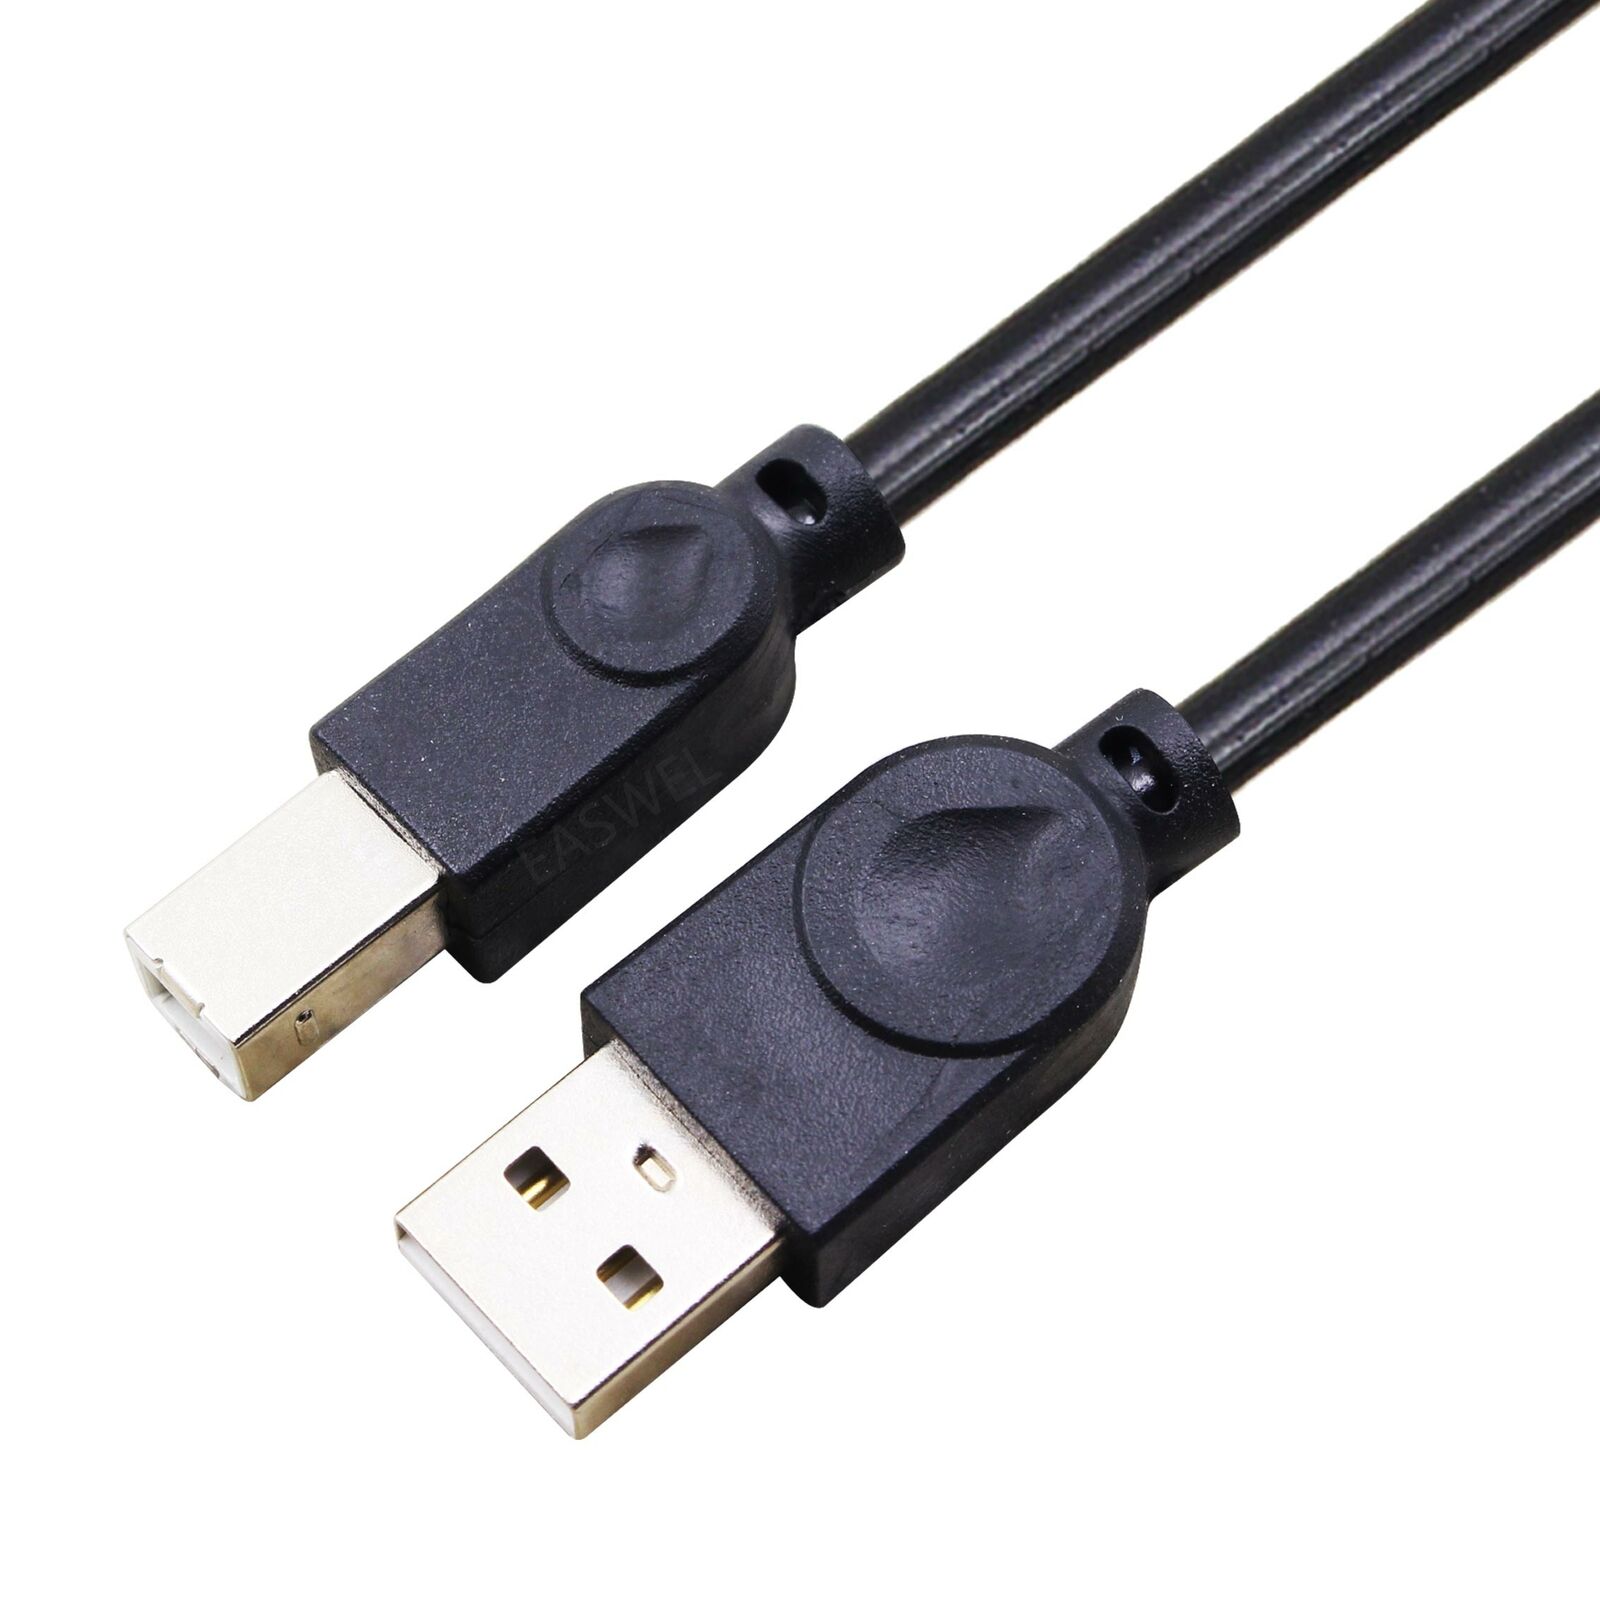 USB 2.0 Cable For USB Audio Interface Behringer U-PHORIA UMC404HD Audiophile